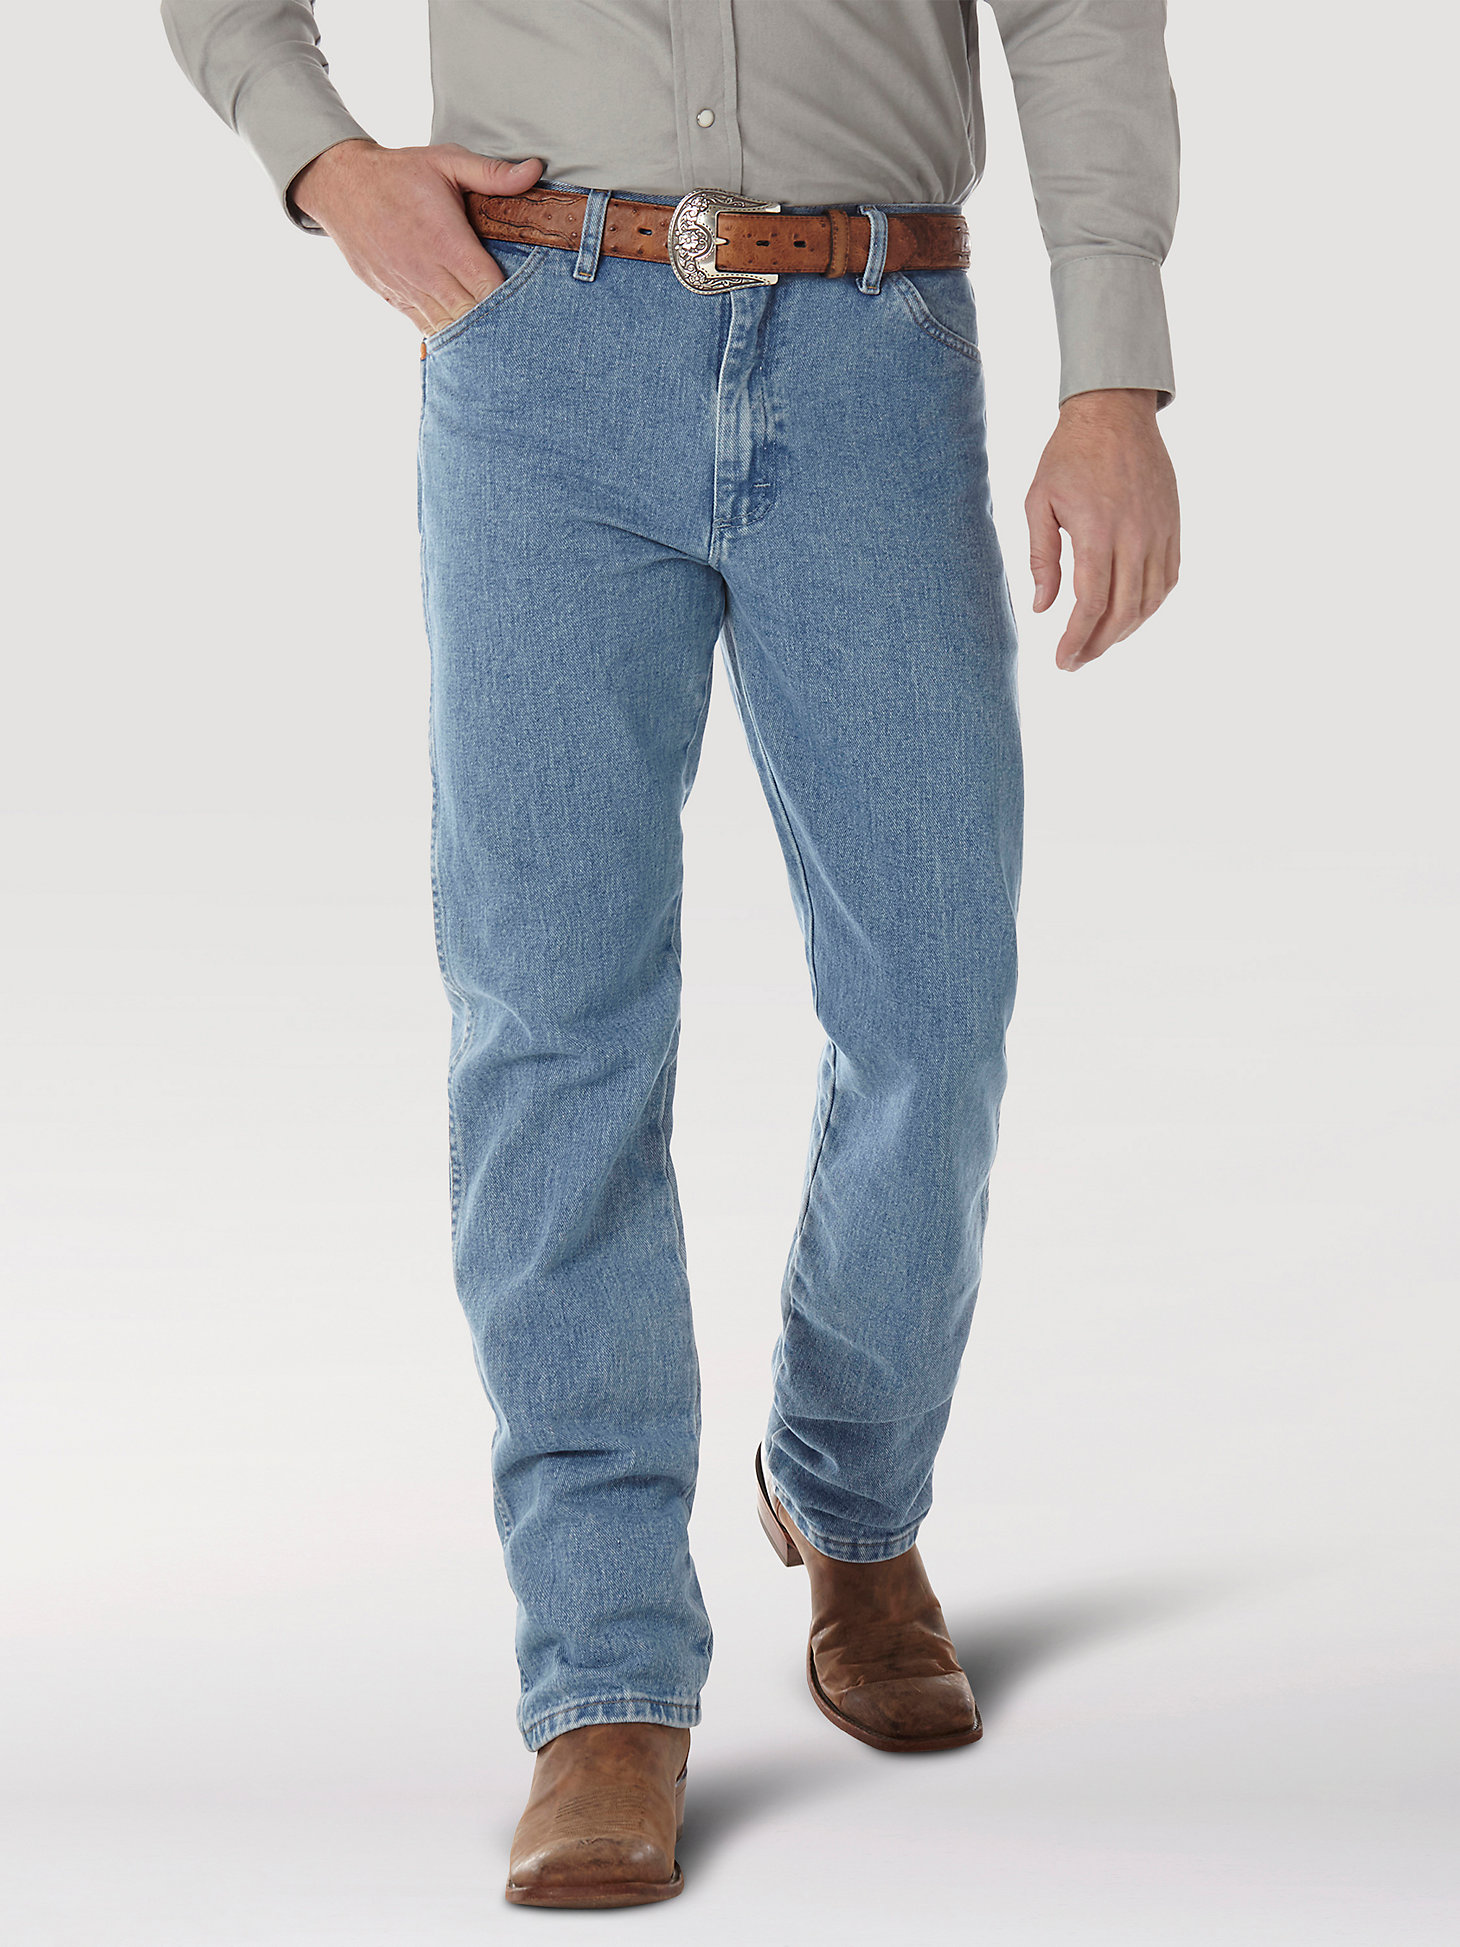 Wrangler® Cowboy Cut® Original Fit Jean in Antique Wash alternative view 2